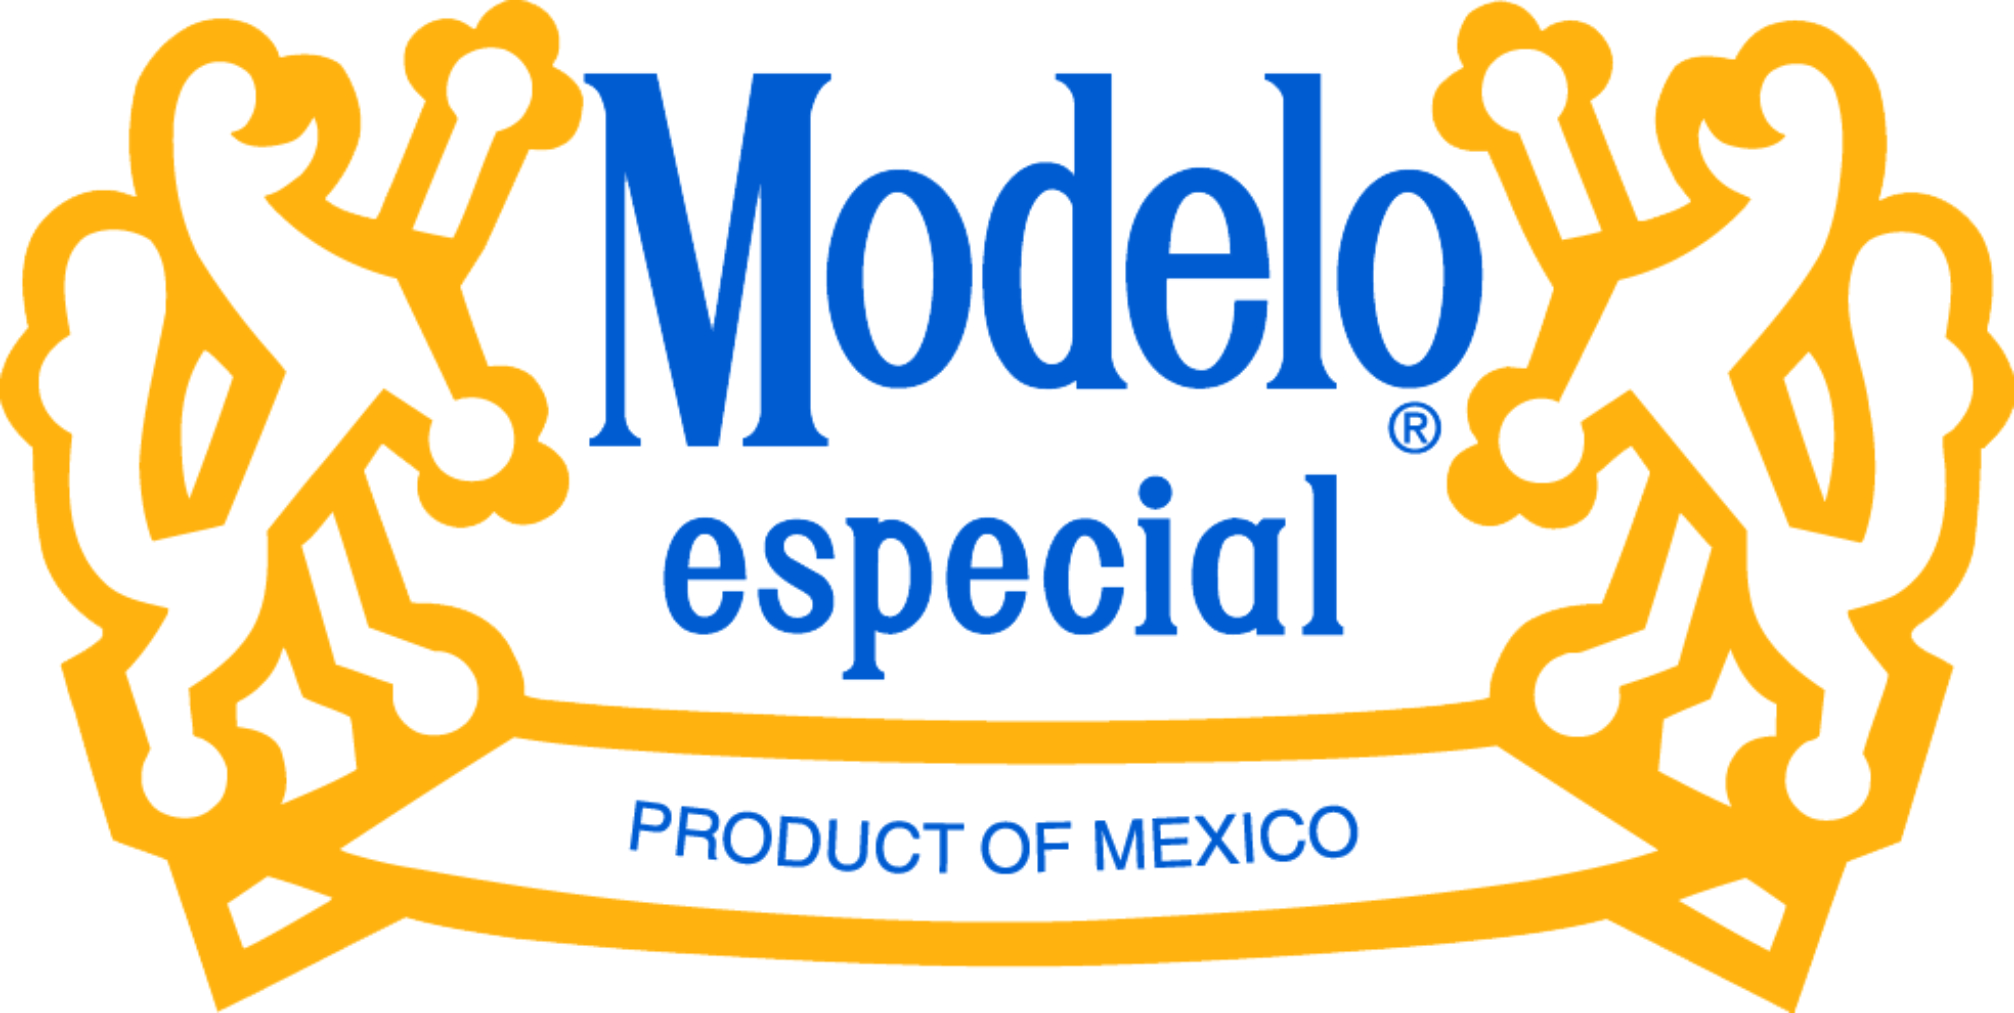 Modelo beer Logos